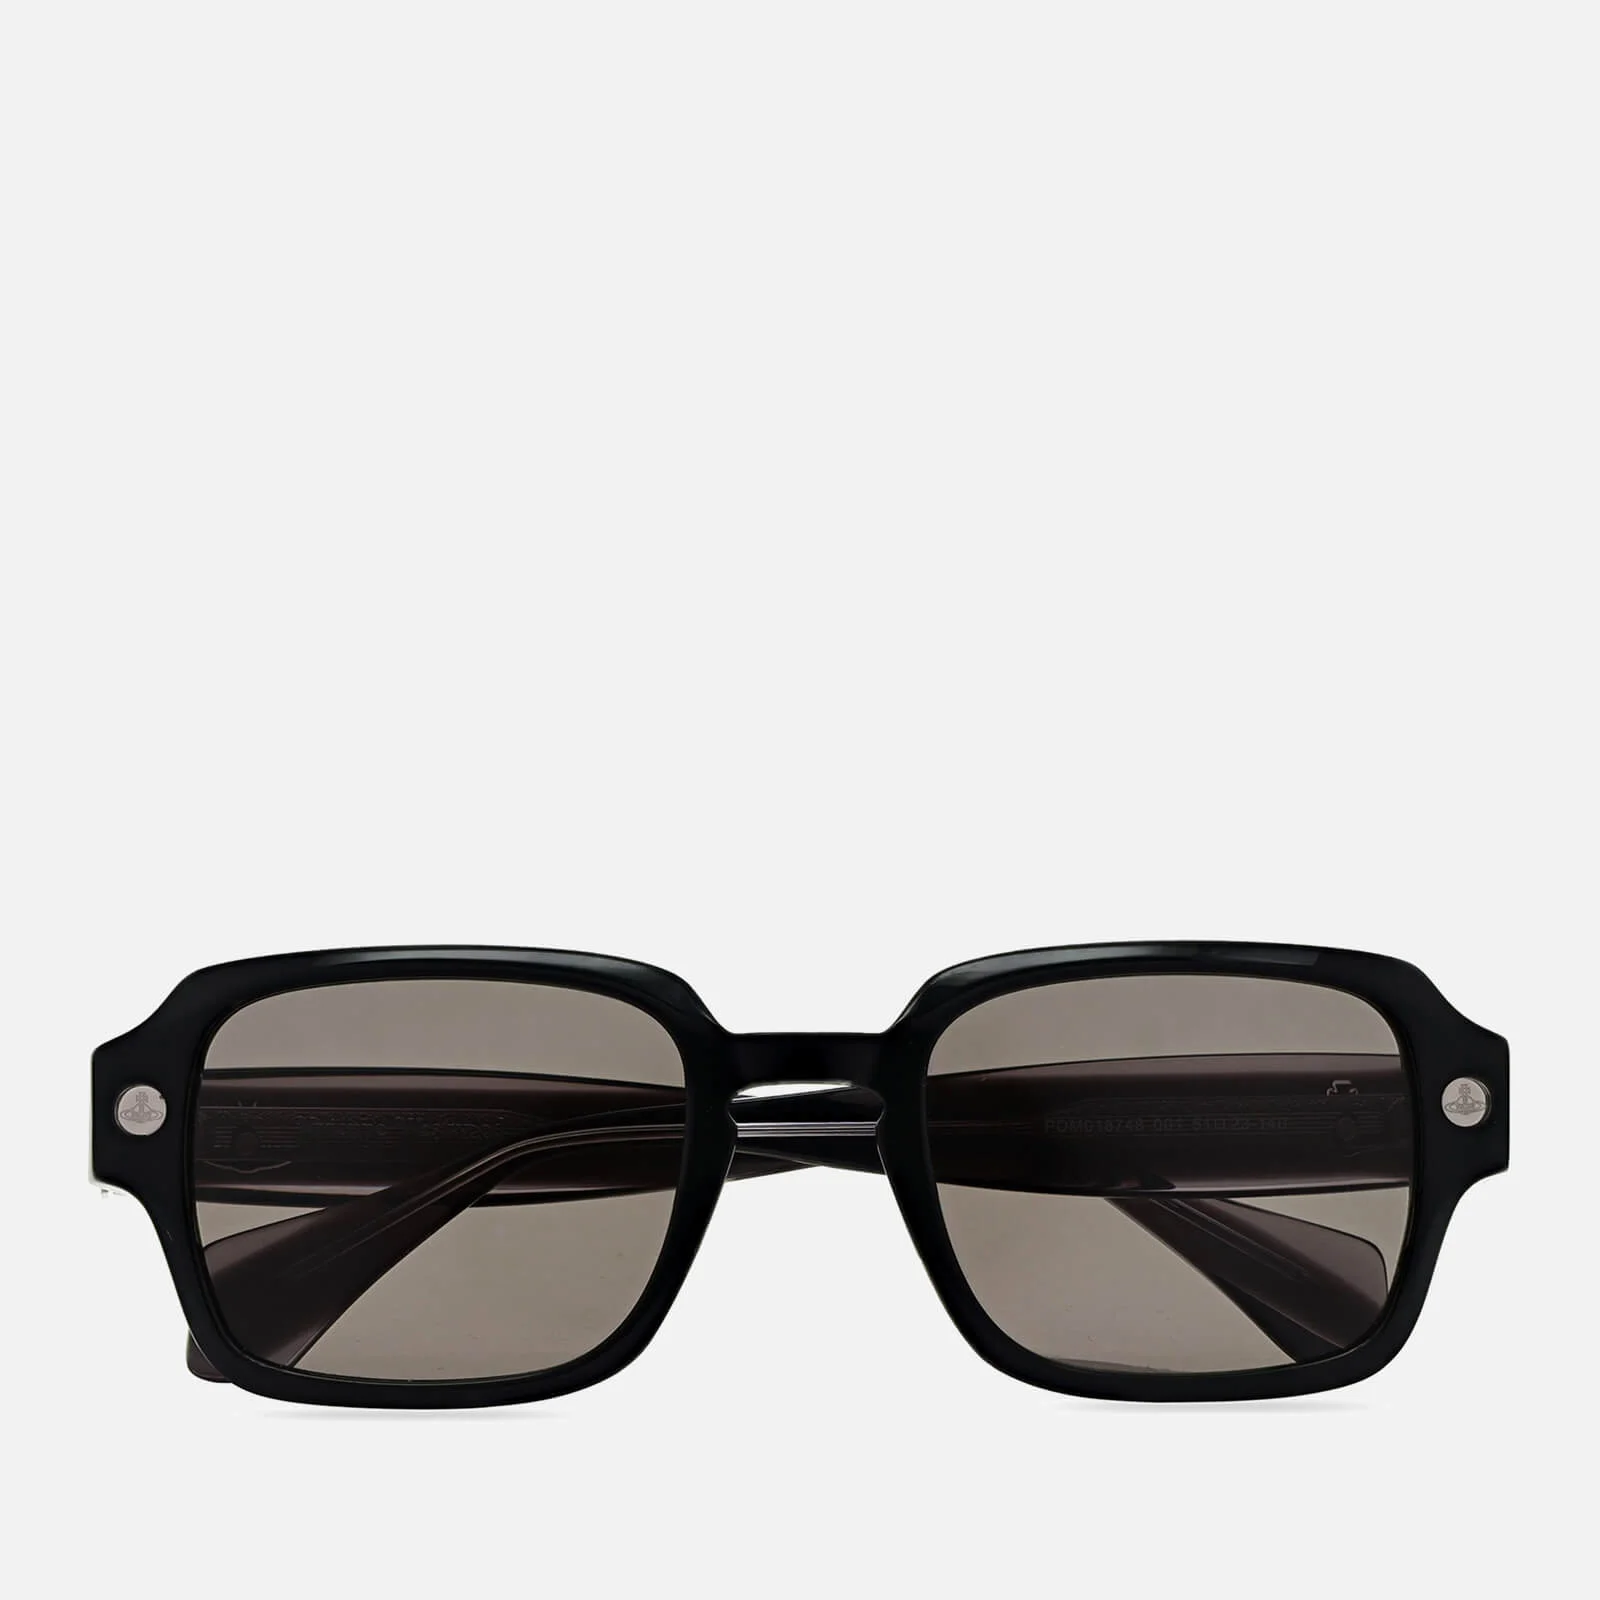 Vivienne Westwood Laurent Rectangle Frame Acetate Sunglasses Image 1